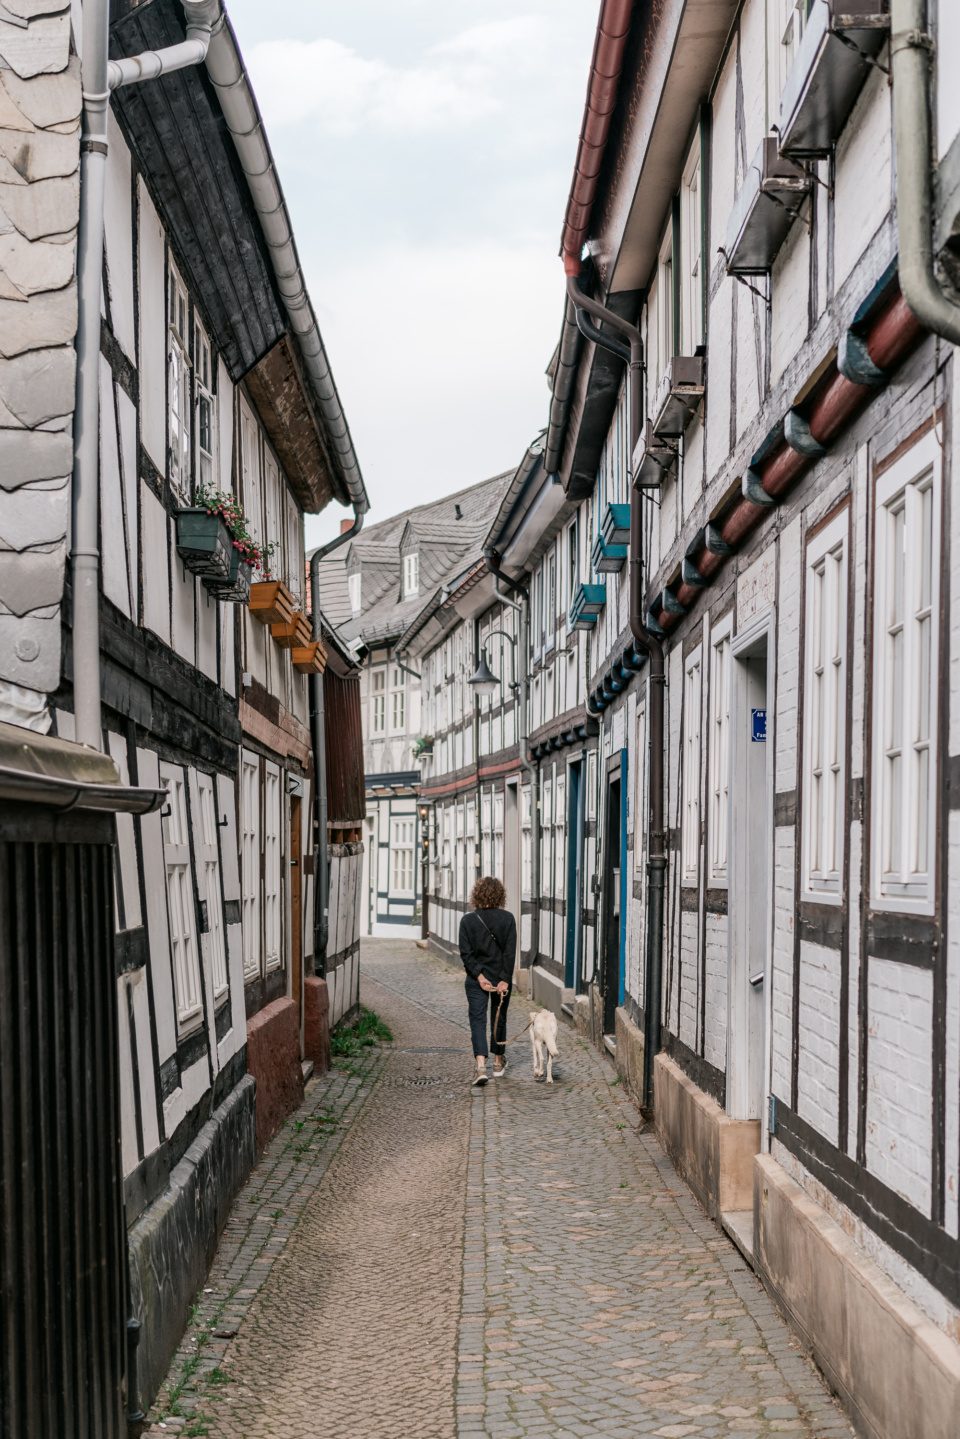 Walking the streets of Goslar, Germany